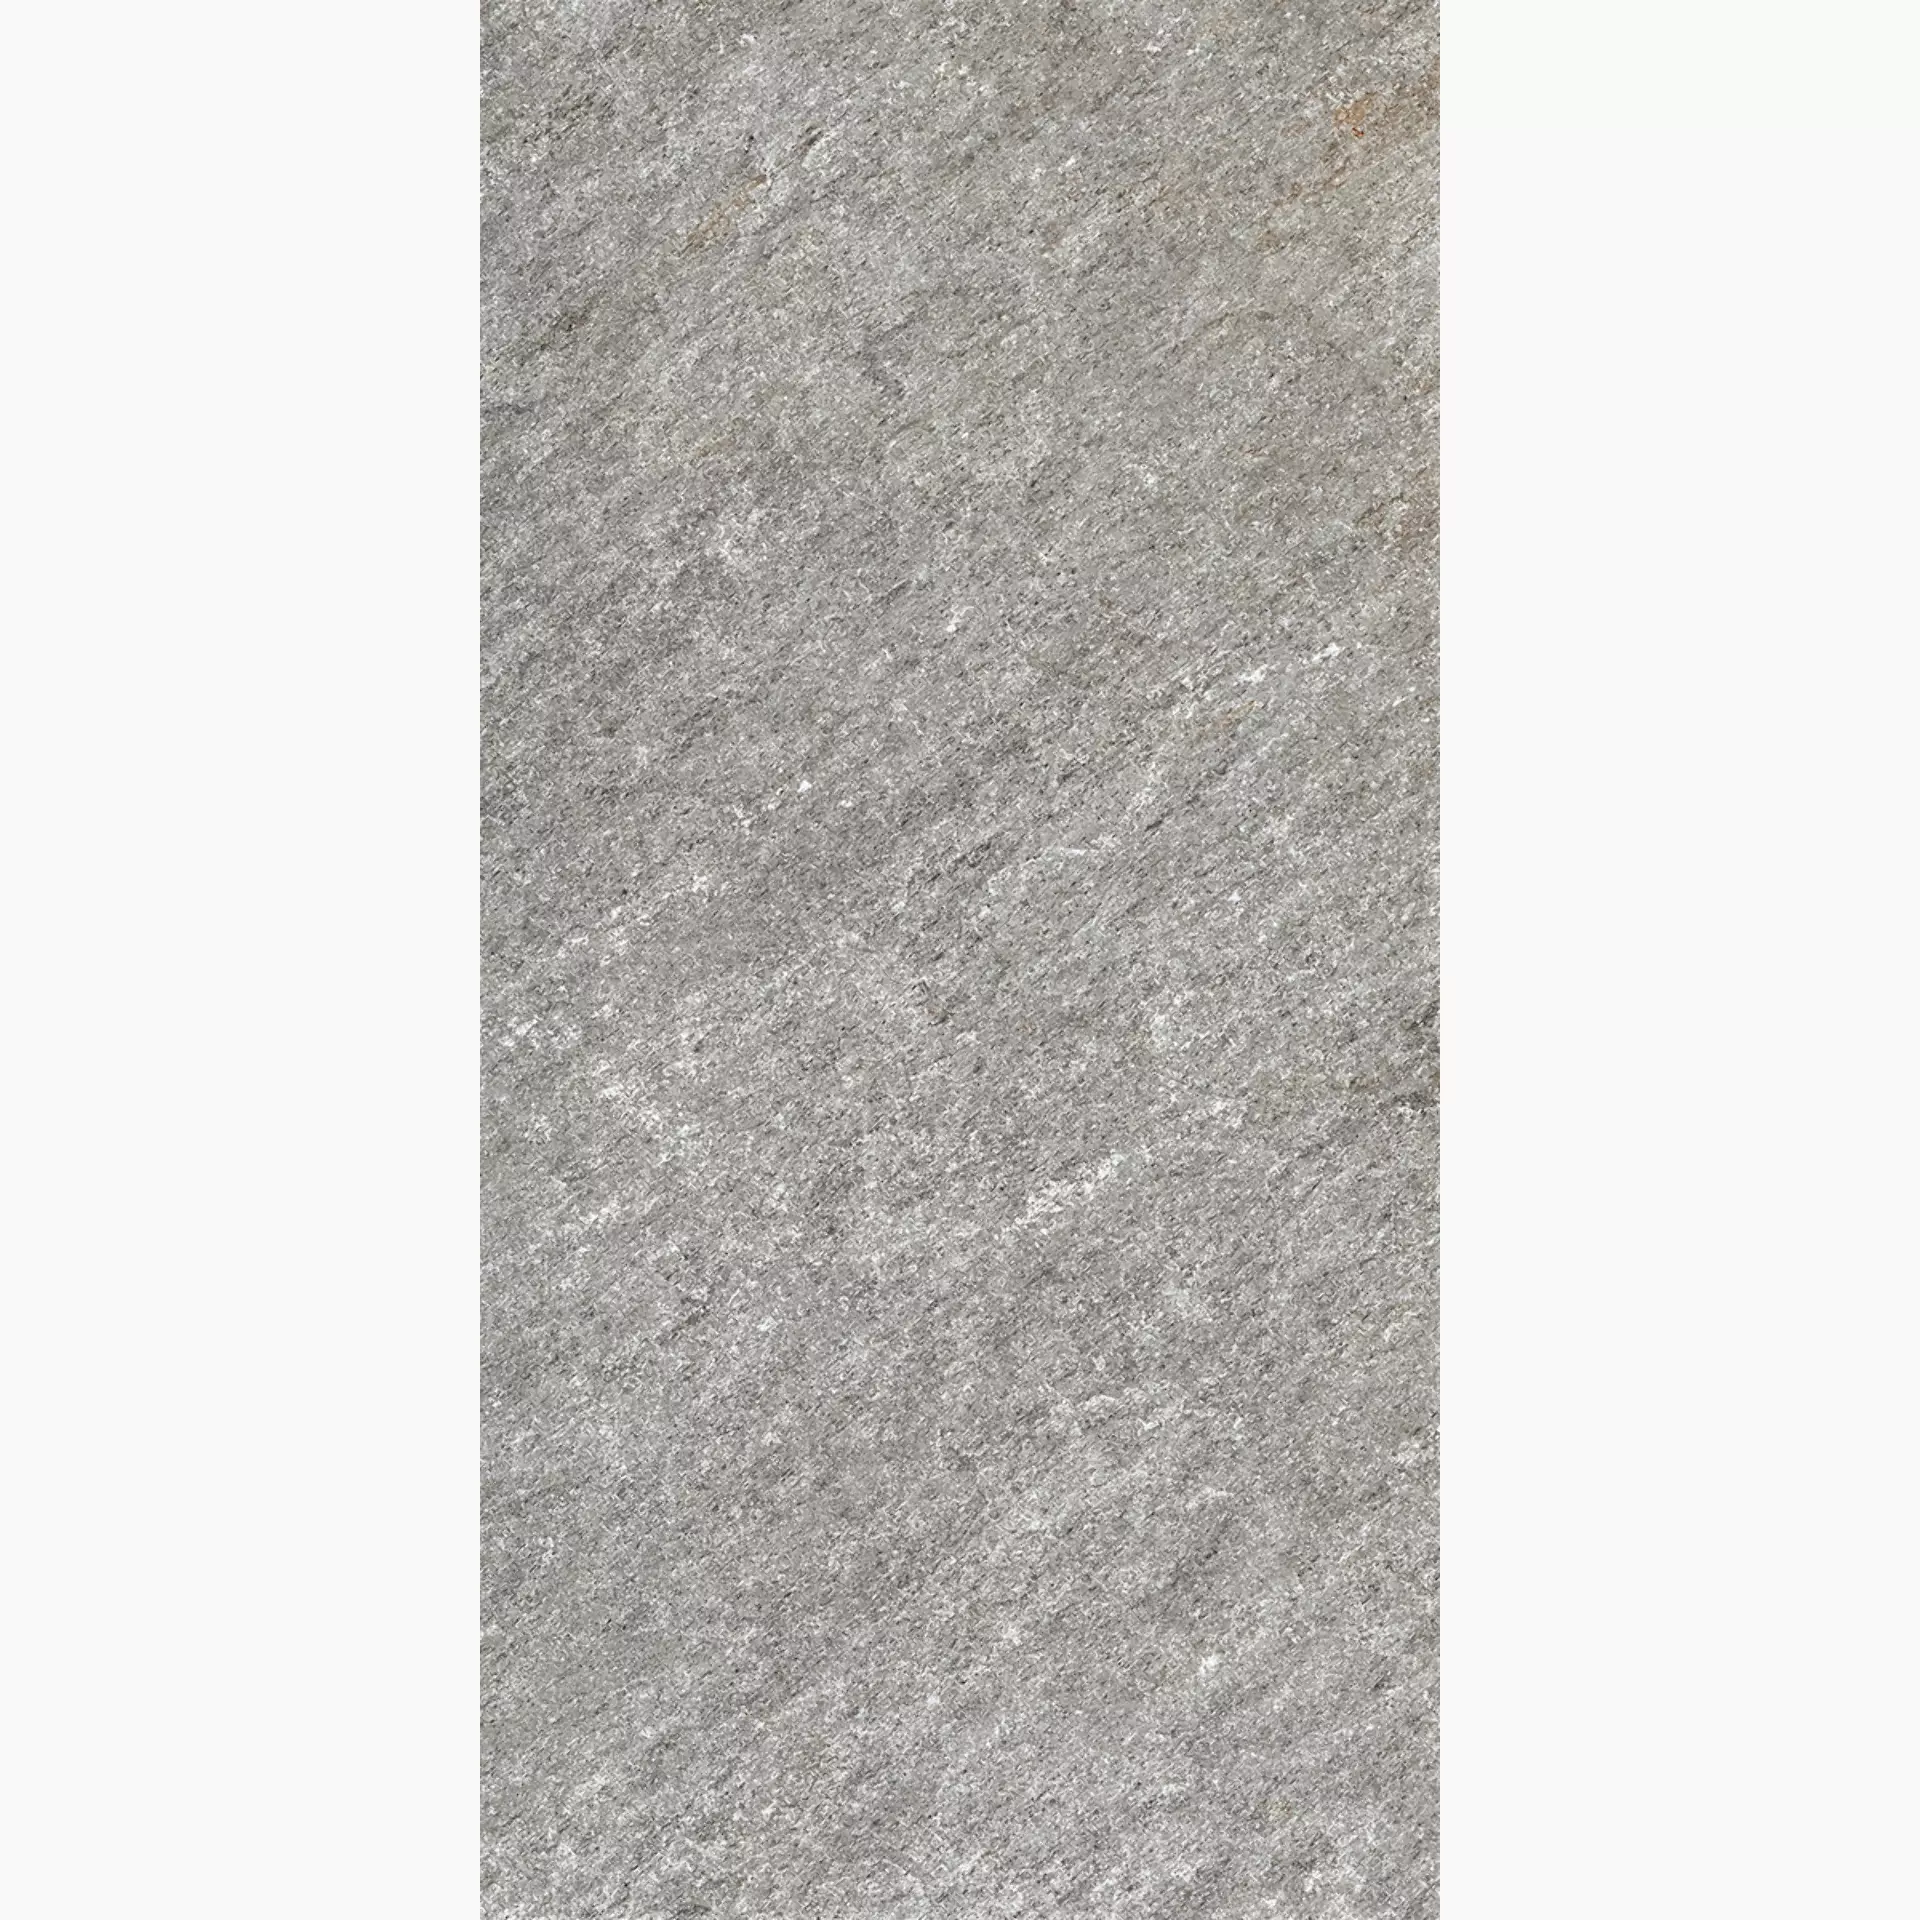 Rondine Quarzi Grey Naturale J87315 20,3x40,6cm 9mm